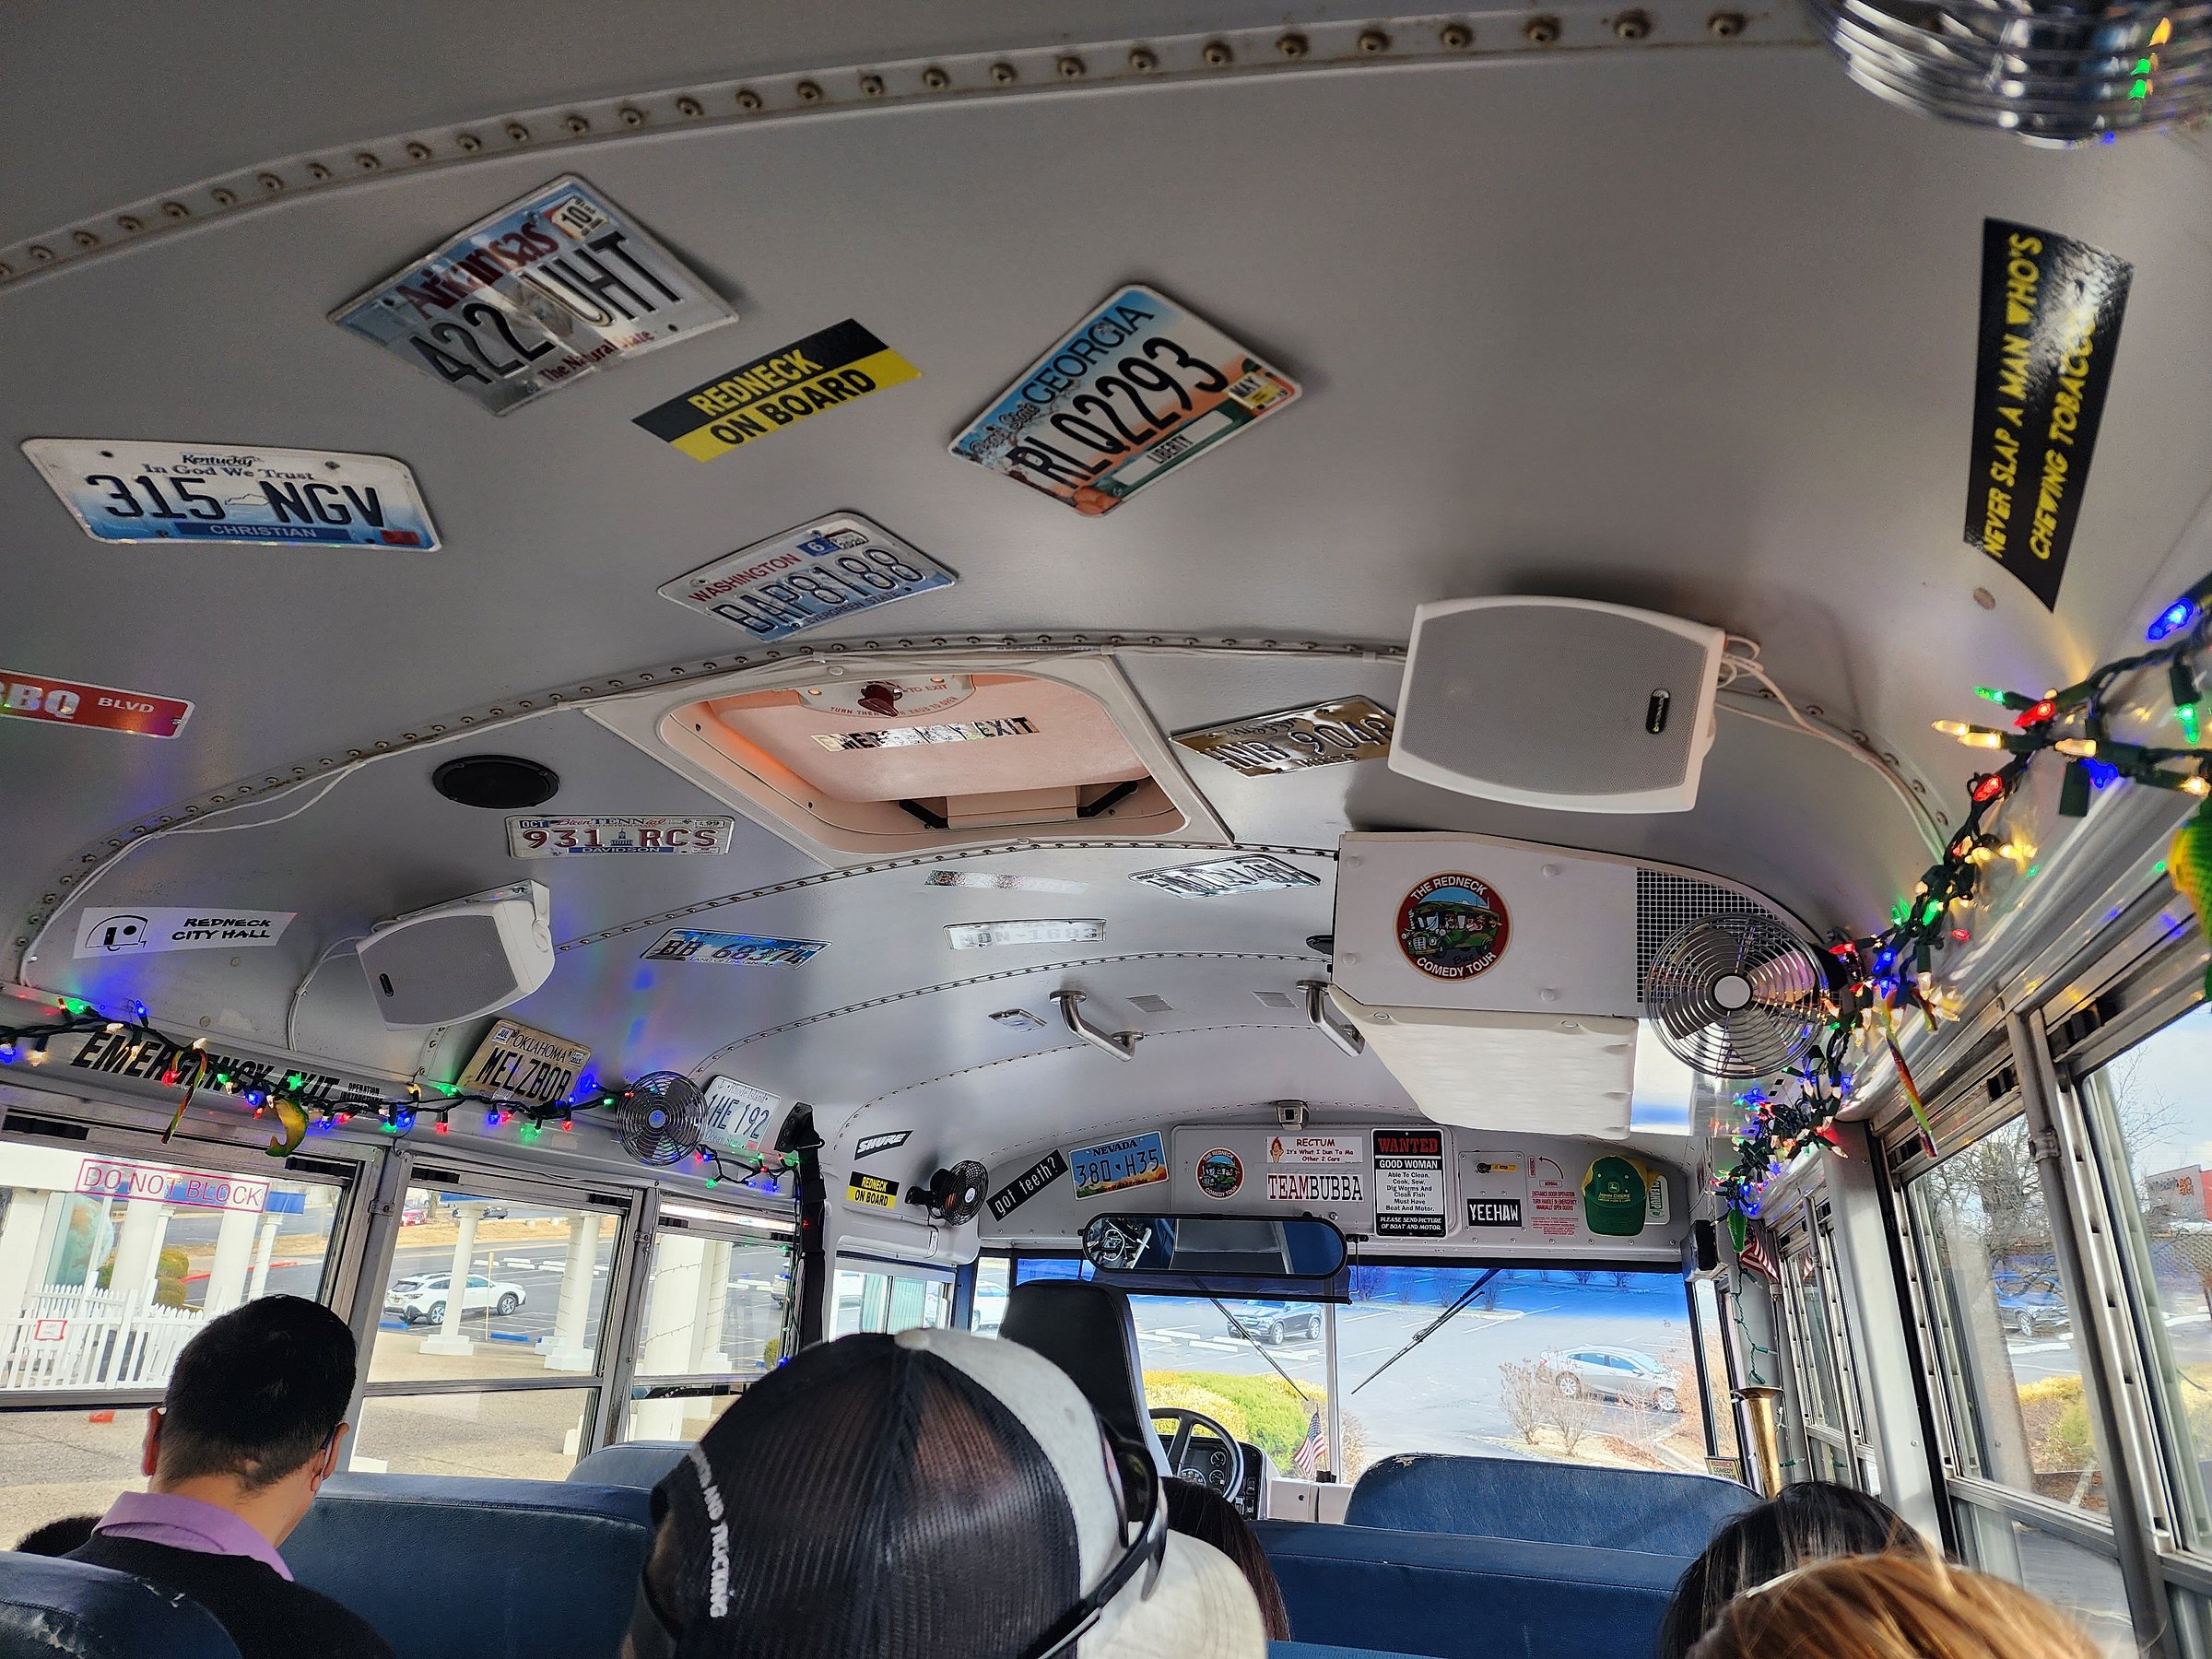 redneck bus tour in branson